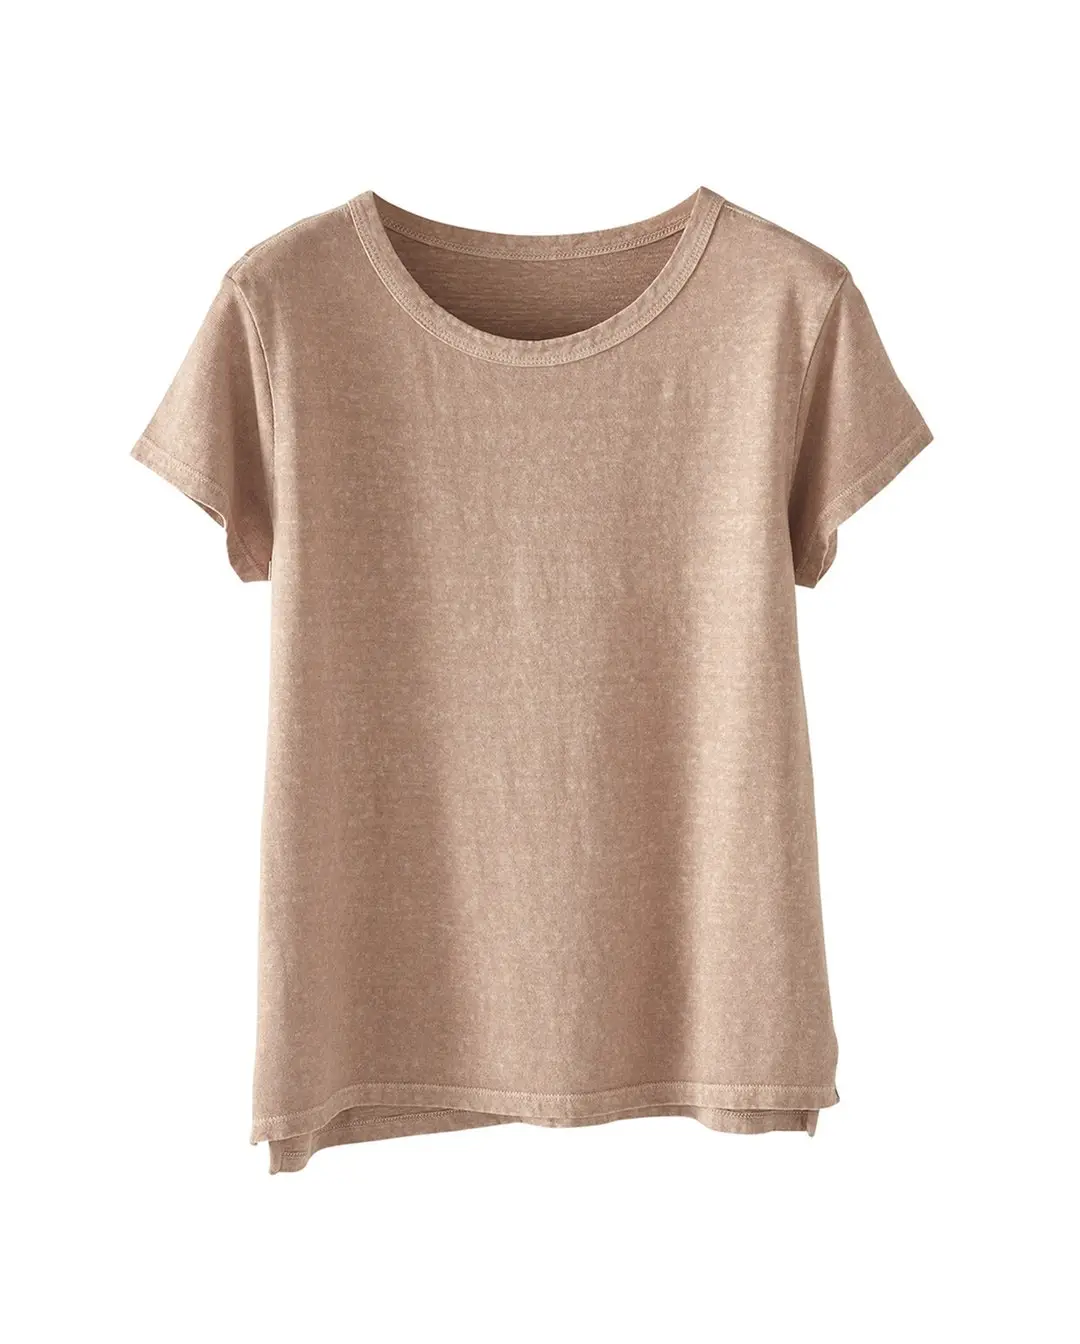 BST033 Sustainable Gots Certified Hemp Organic Cotton Blended Women TシャツHemp Tシャツ衣料品メーカー